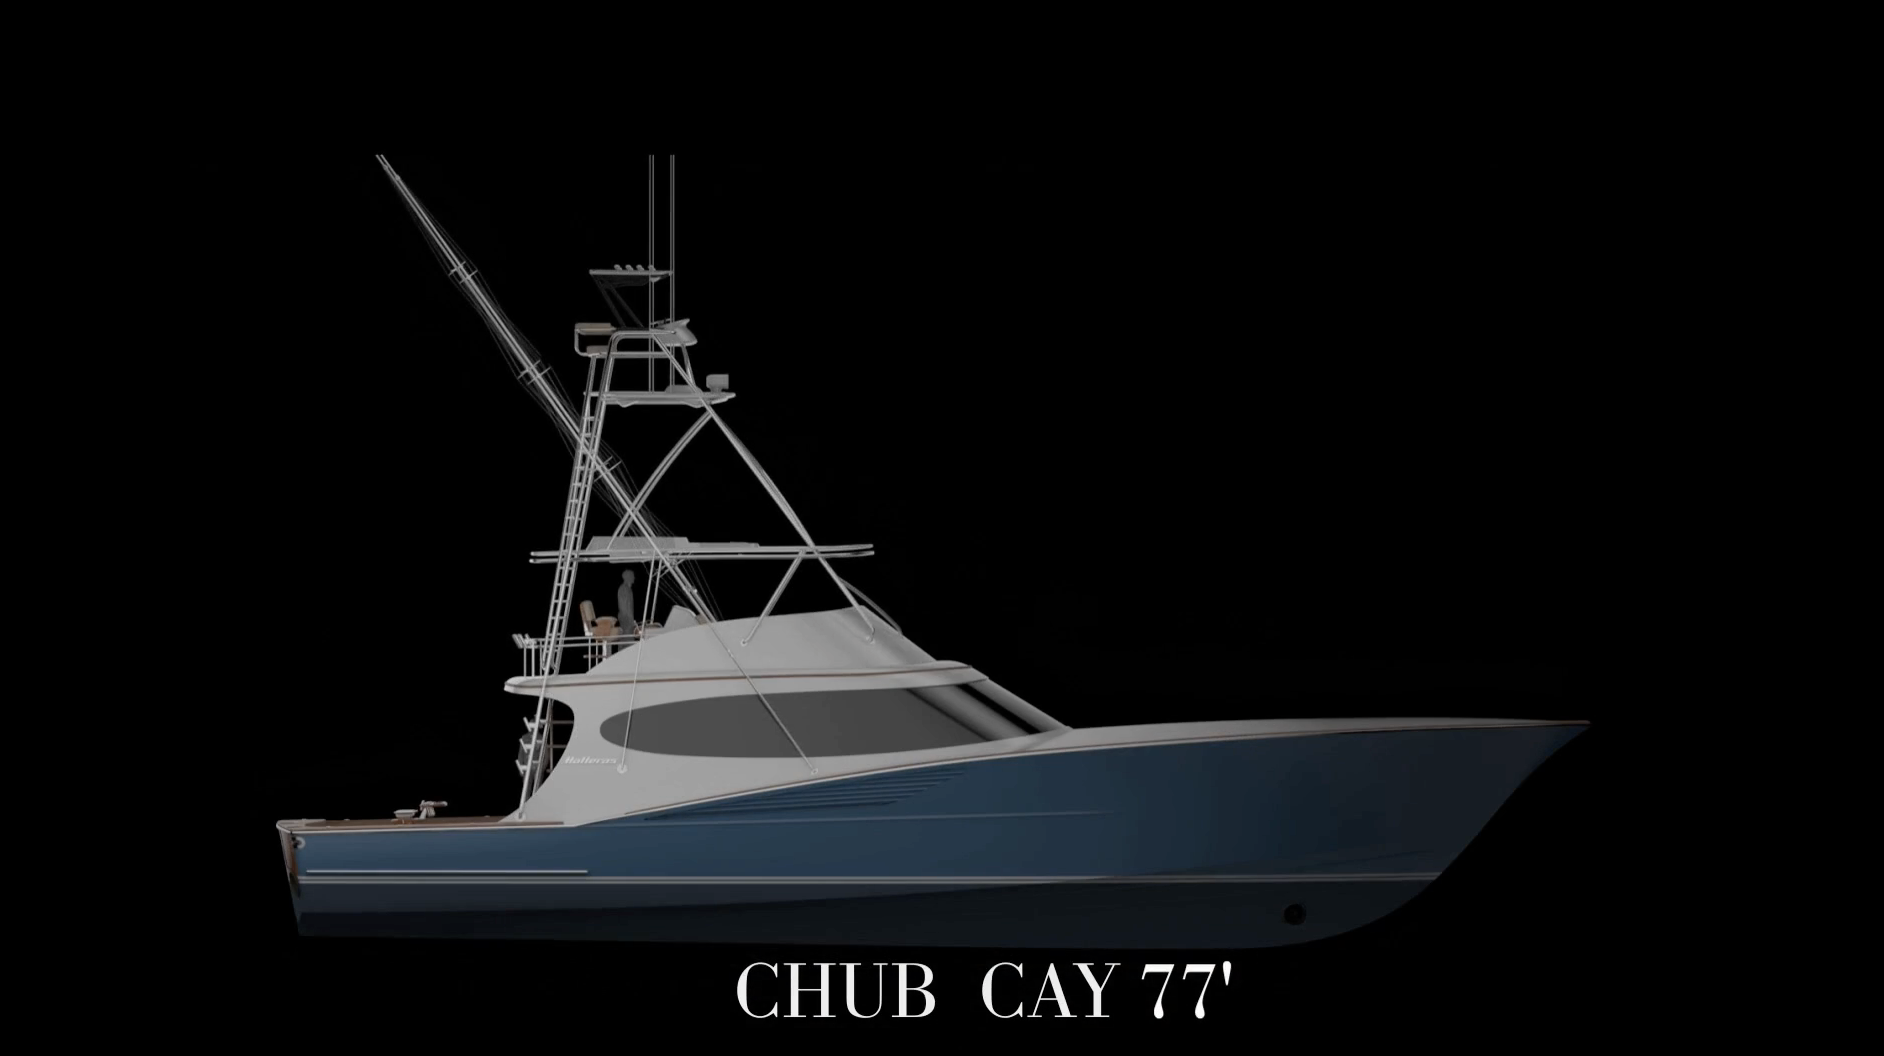 Hatteras Chub Cay 77 model